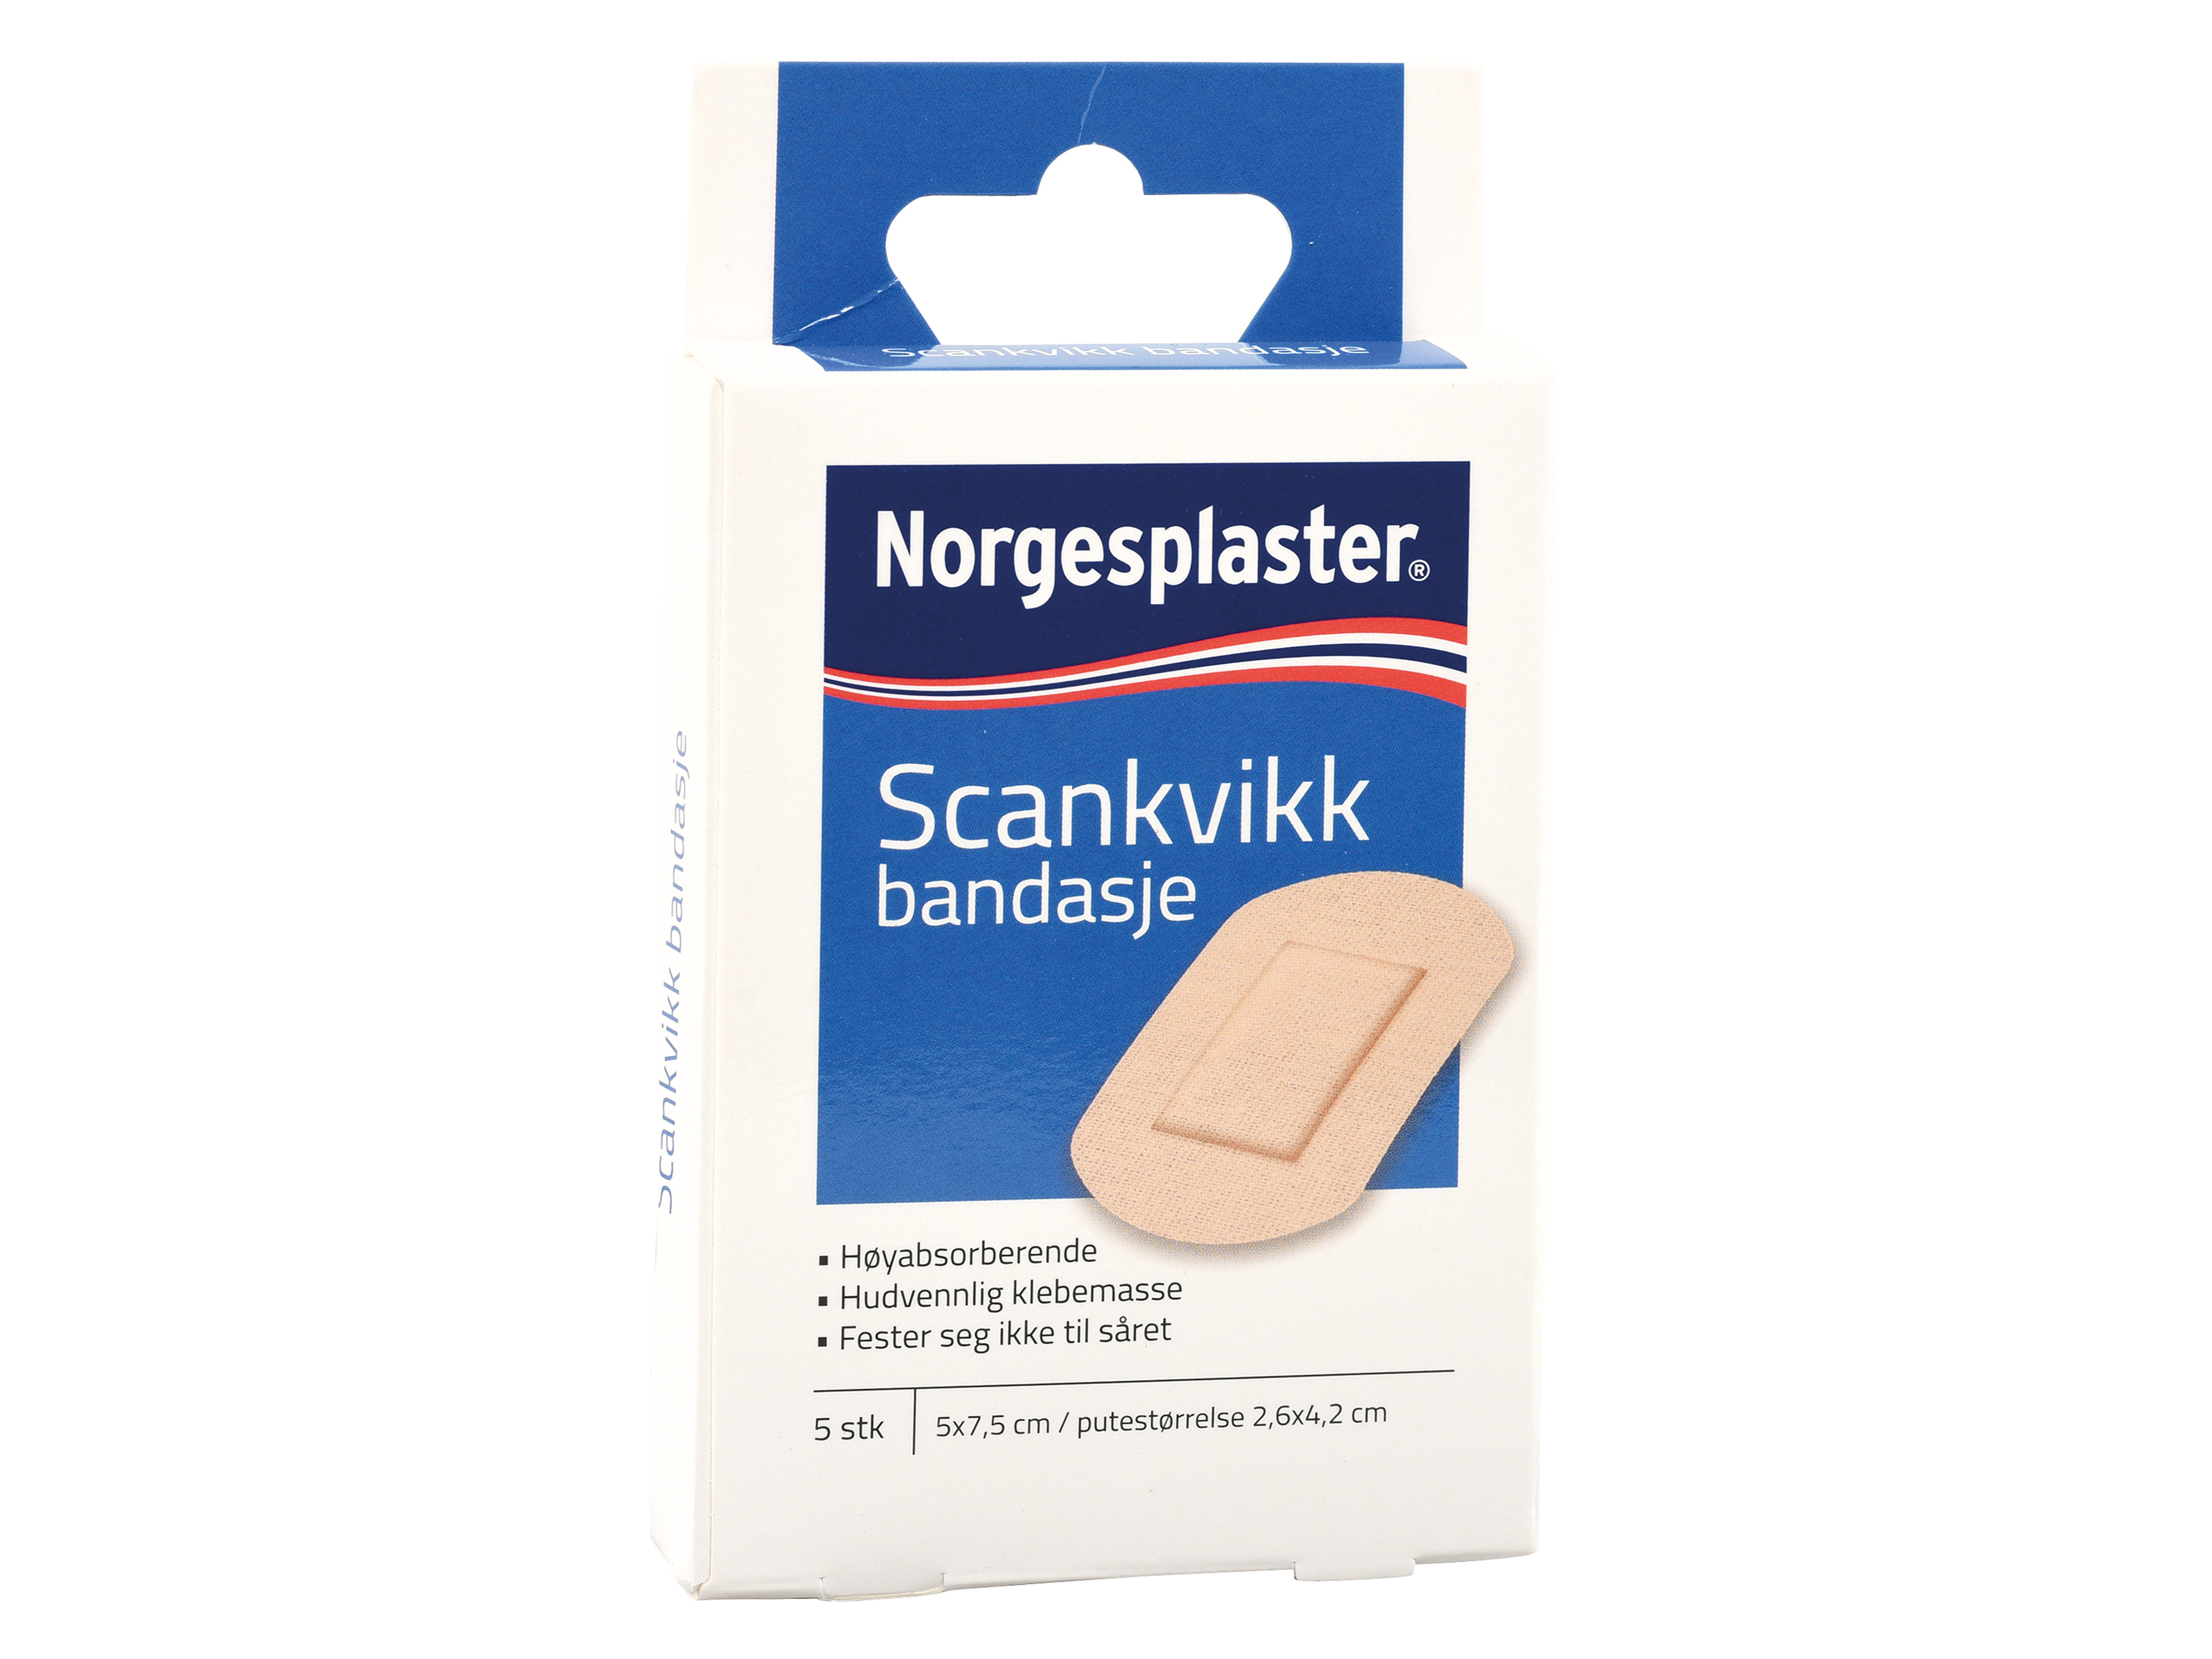 Norgesplaster Scankvikk bandasje beige, 5x7,5 cm, 5 stk.